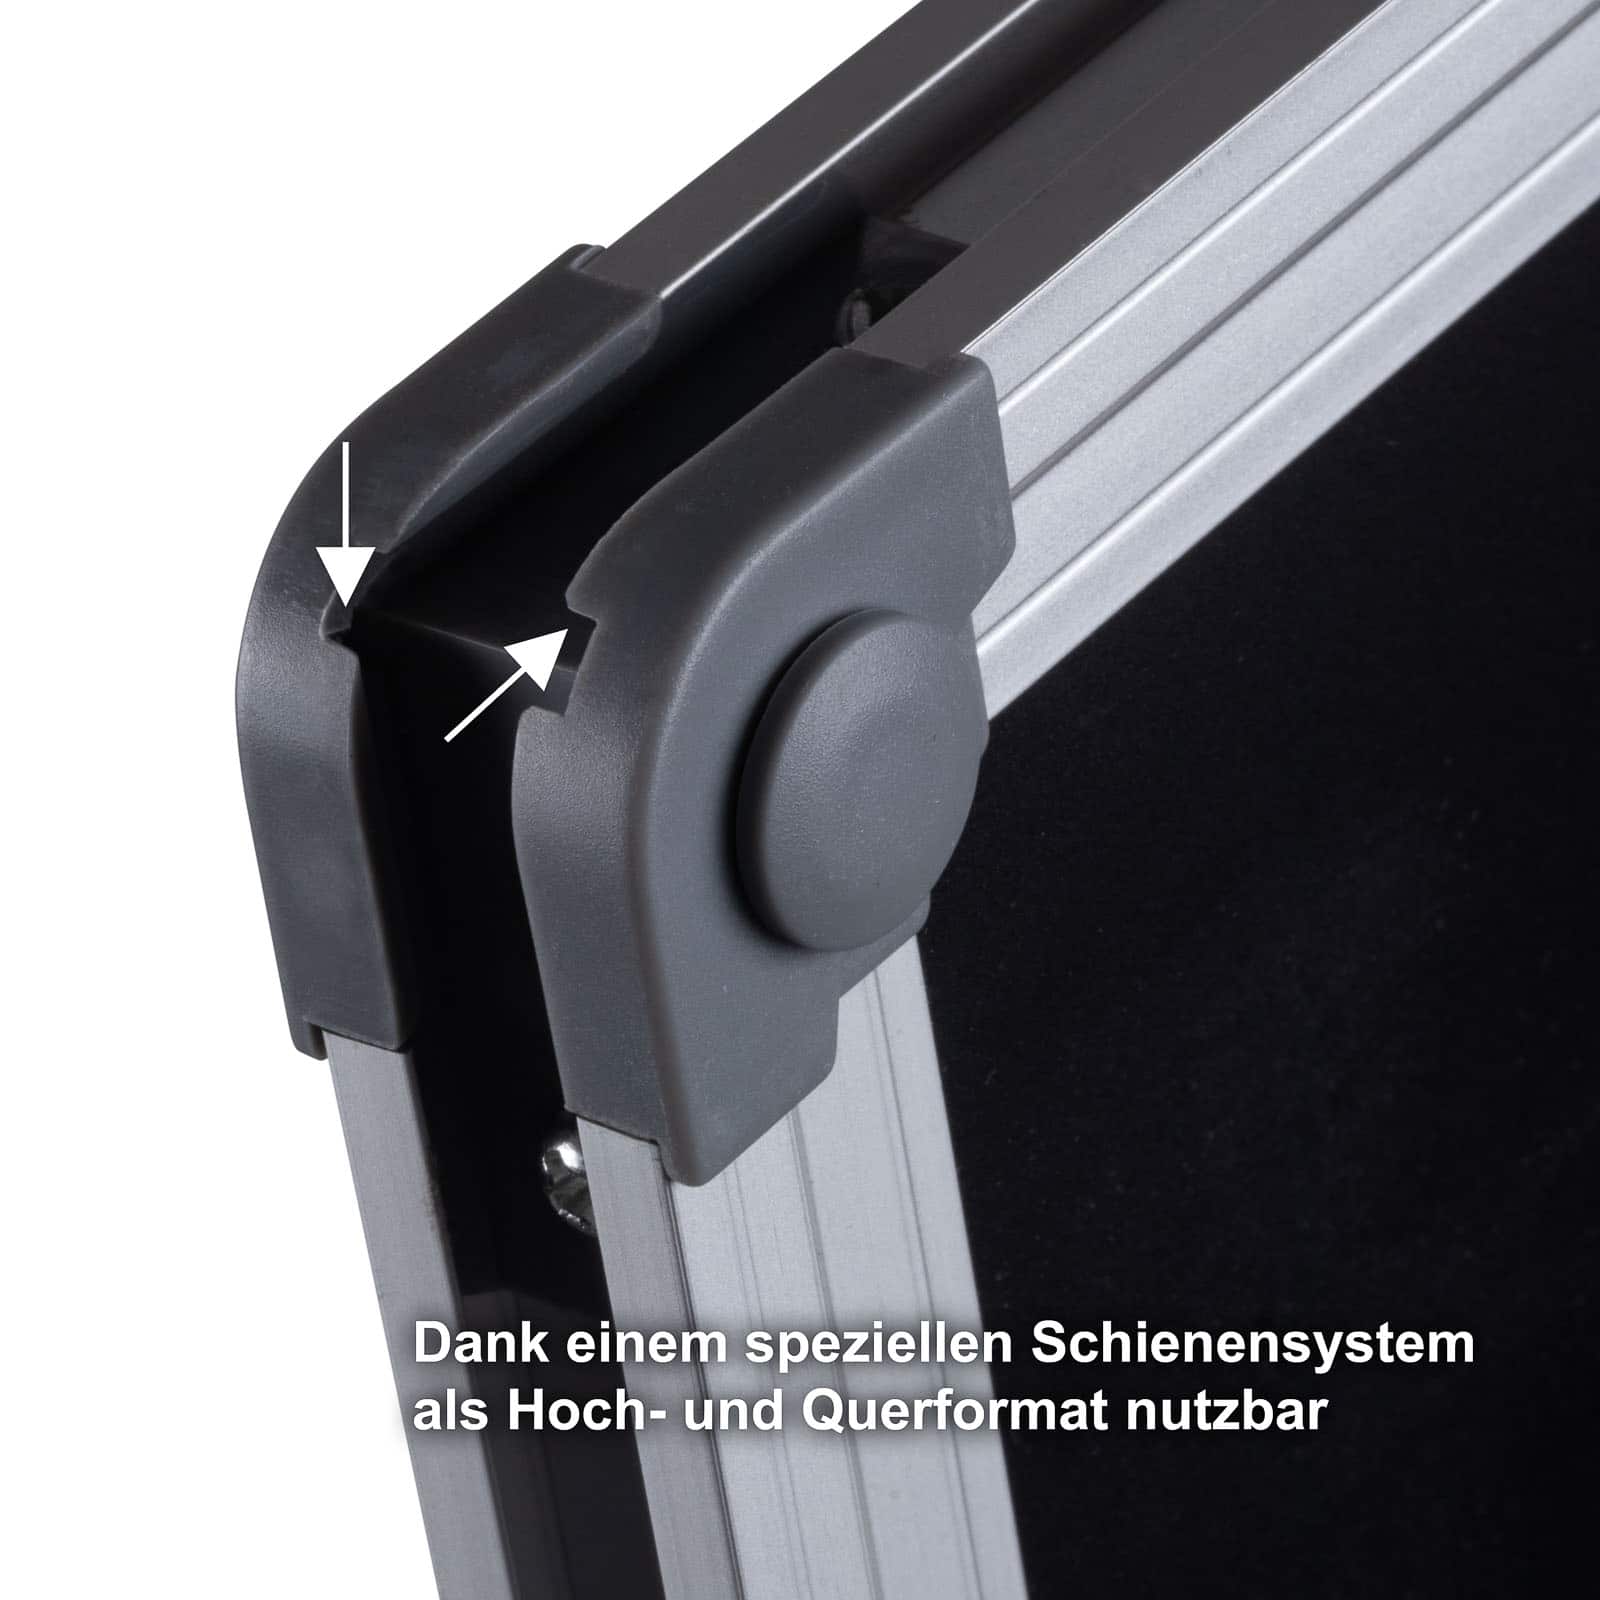 BuroMi Magnetisch Zwart Krijtbord 40x30 cm Alu frame - incl. toehoren